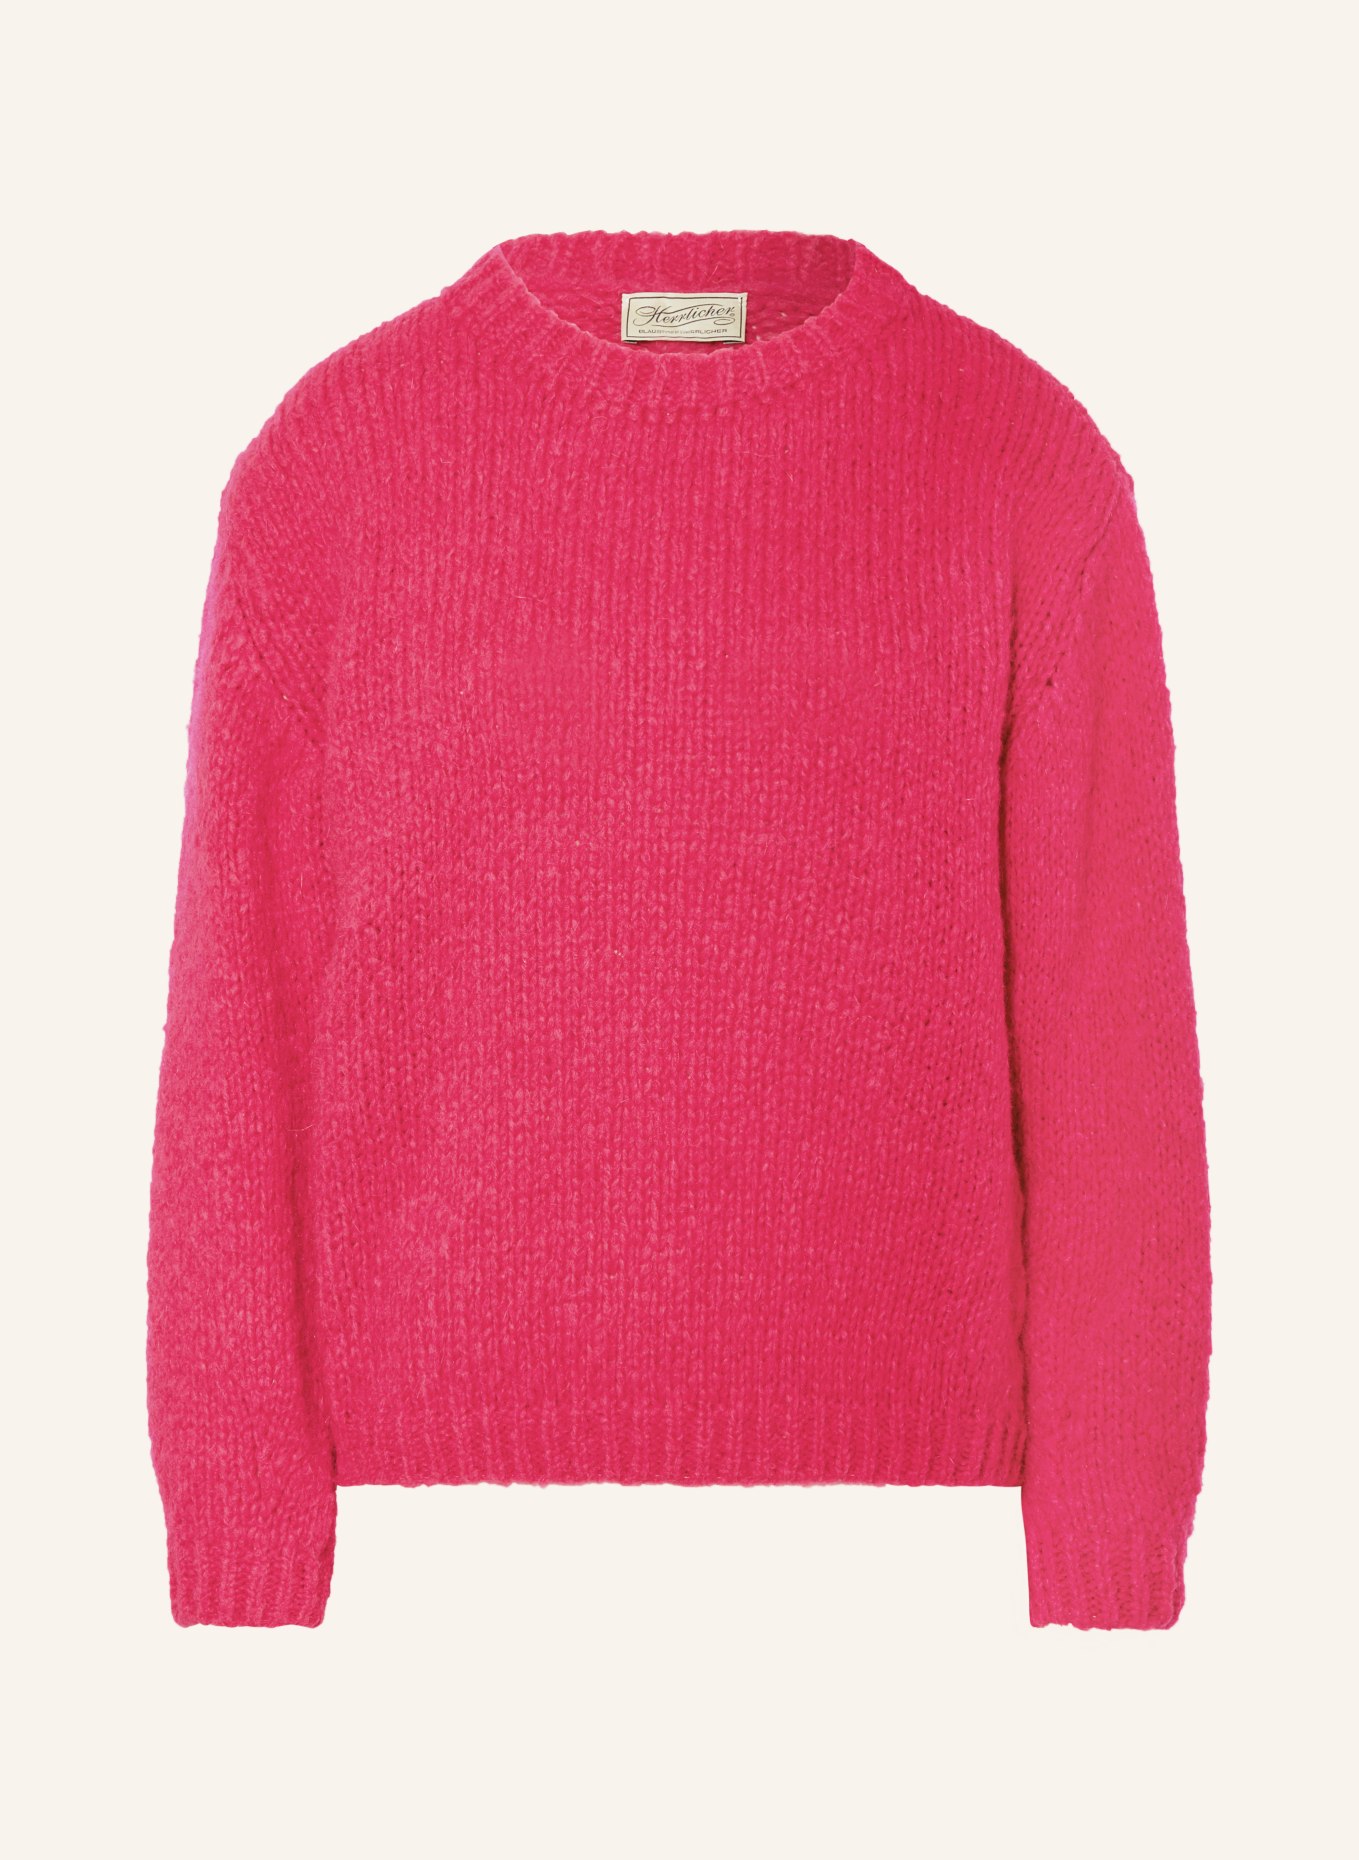 Herrlicher Pullover DOMENICA, Farbe: PINK (Bild 1)